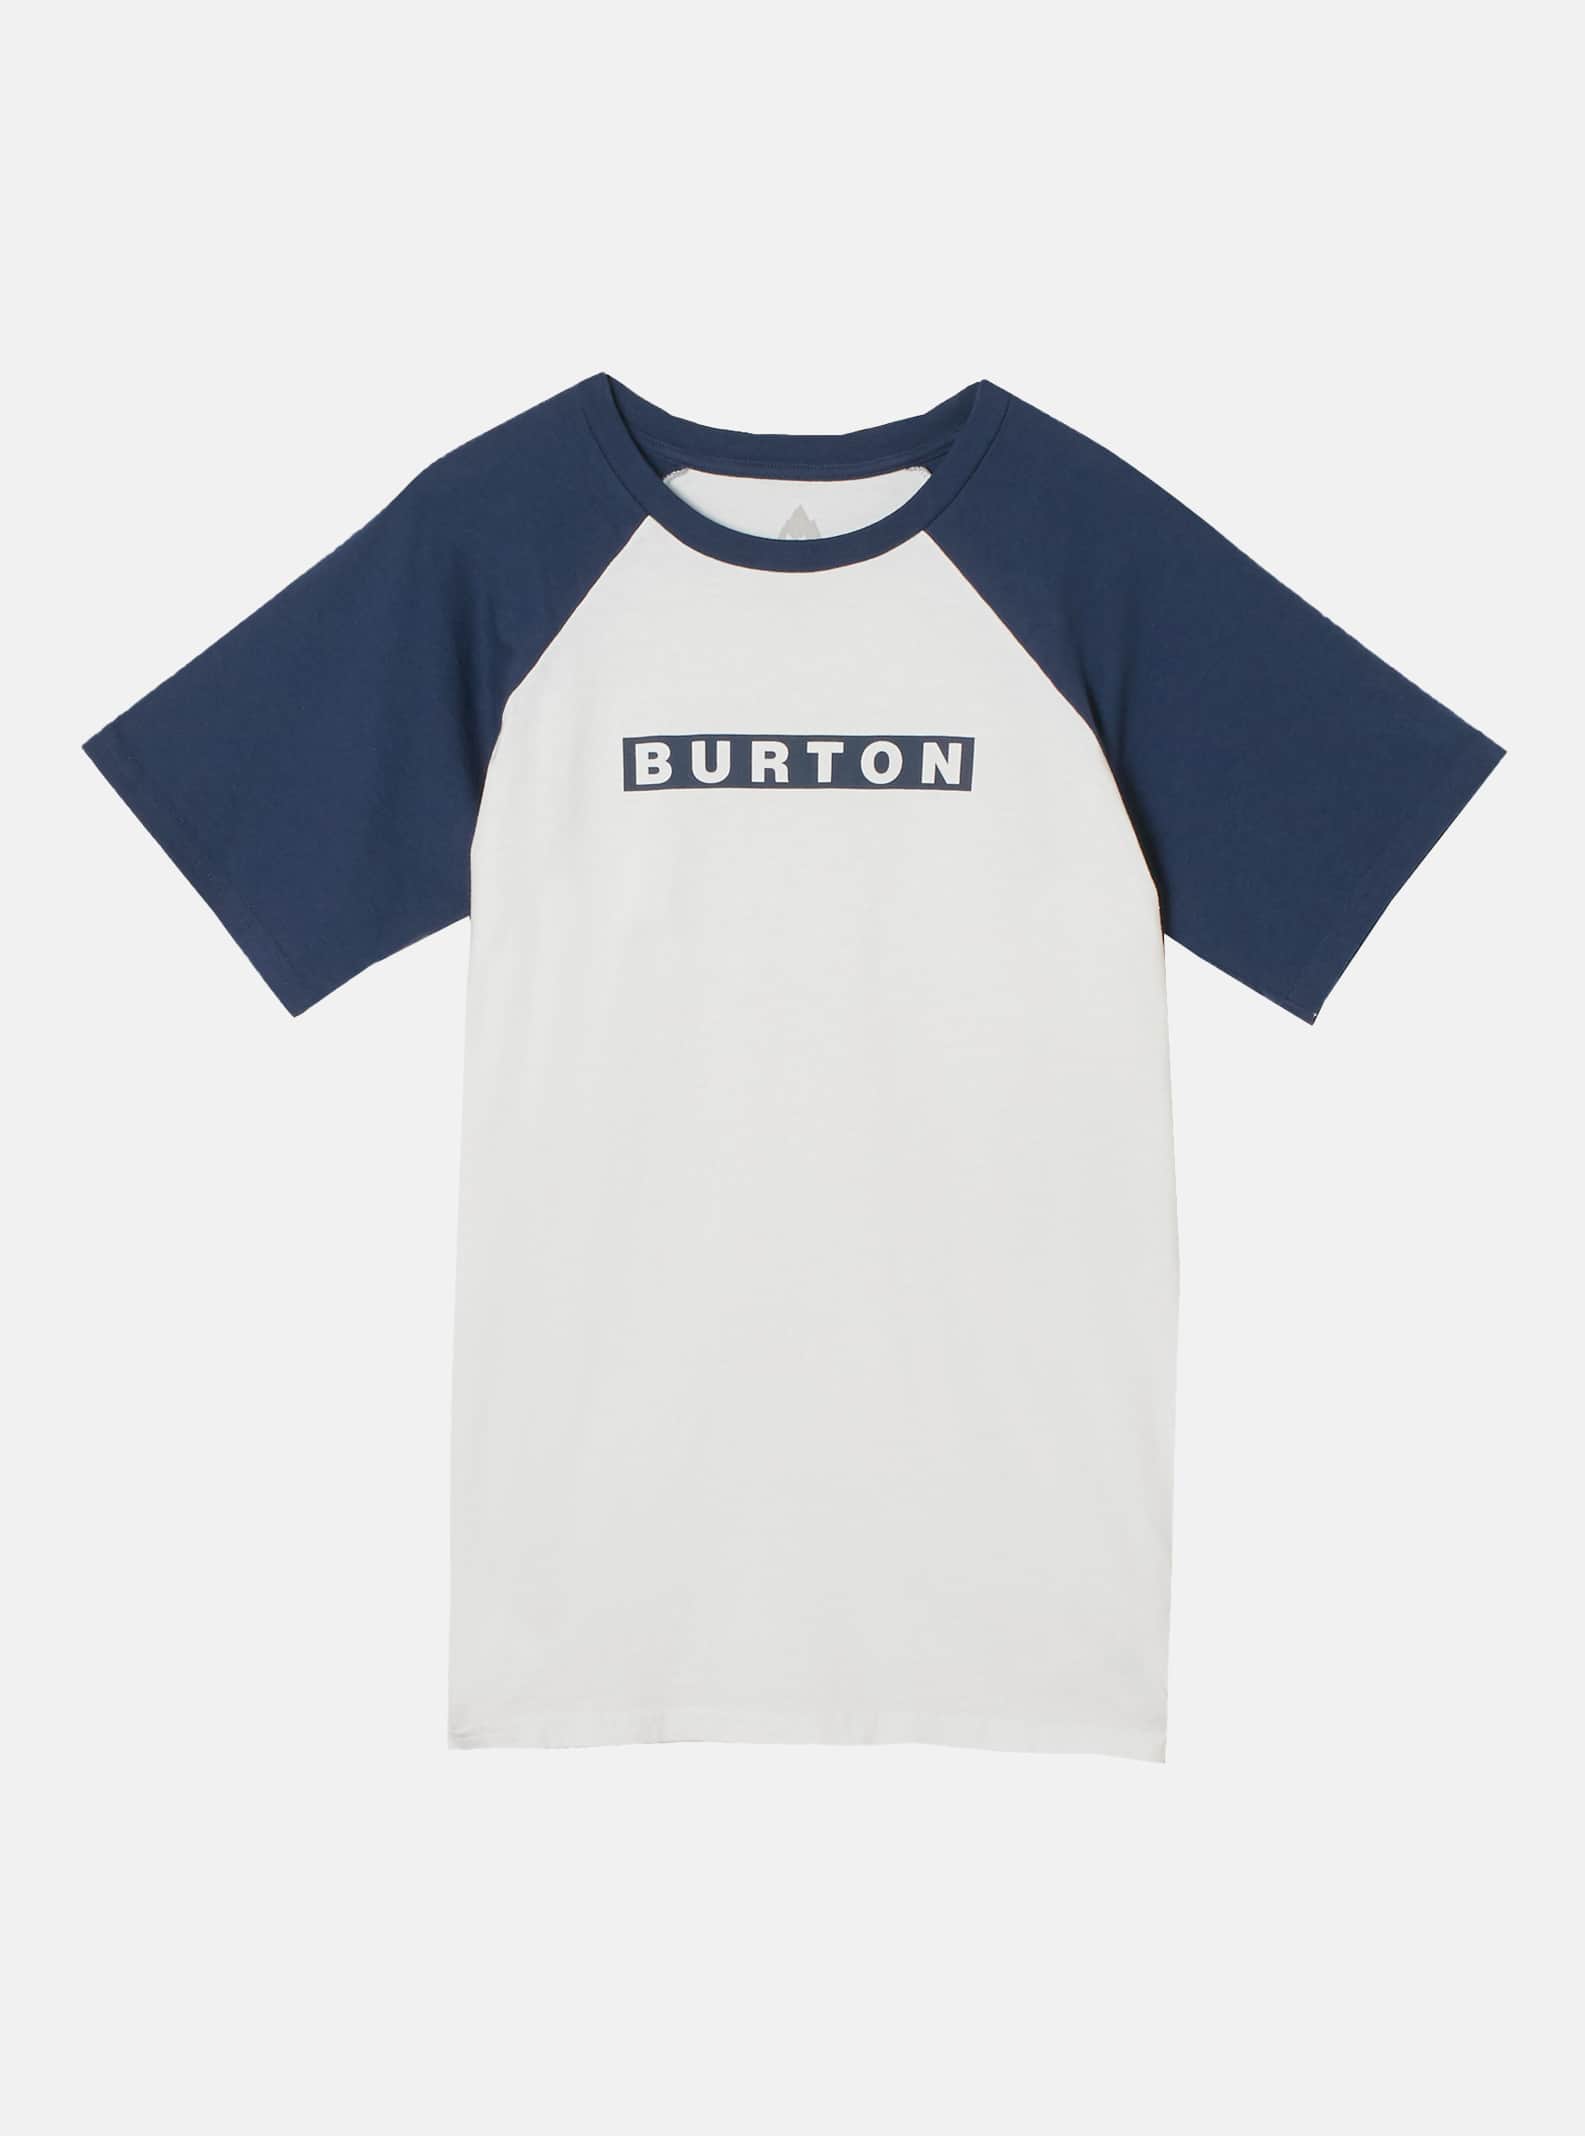 Burton Vault kortärmad t-shirt för barn, Stout White / Dress Blue, M